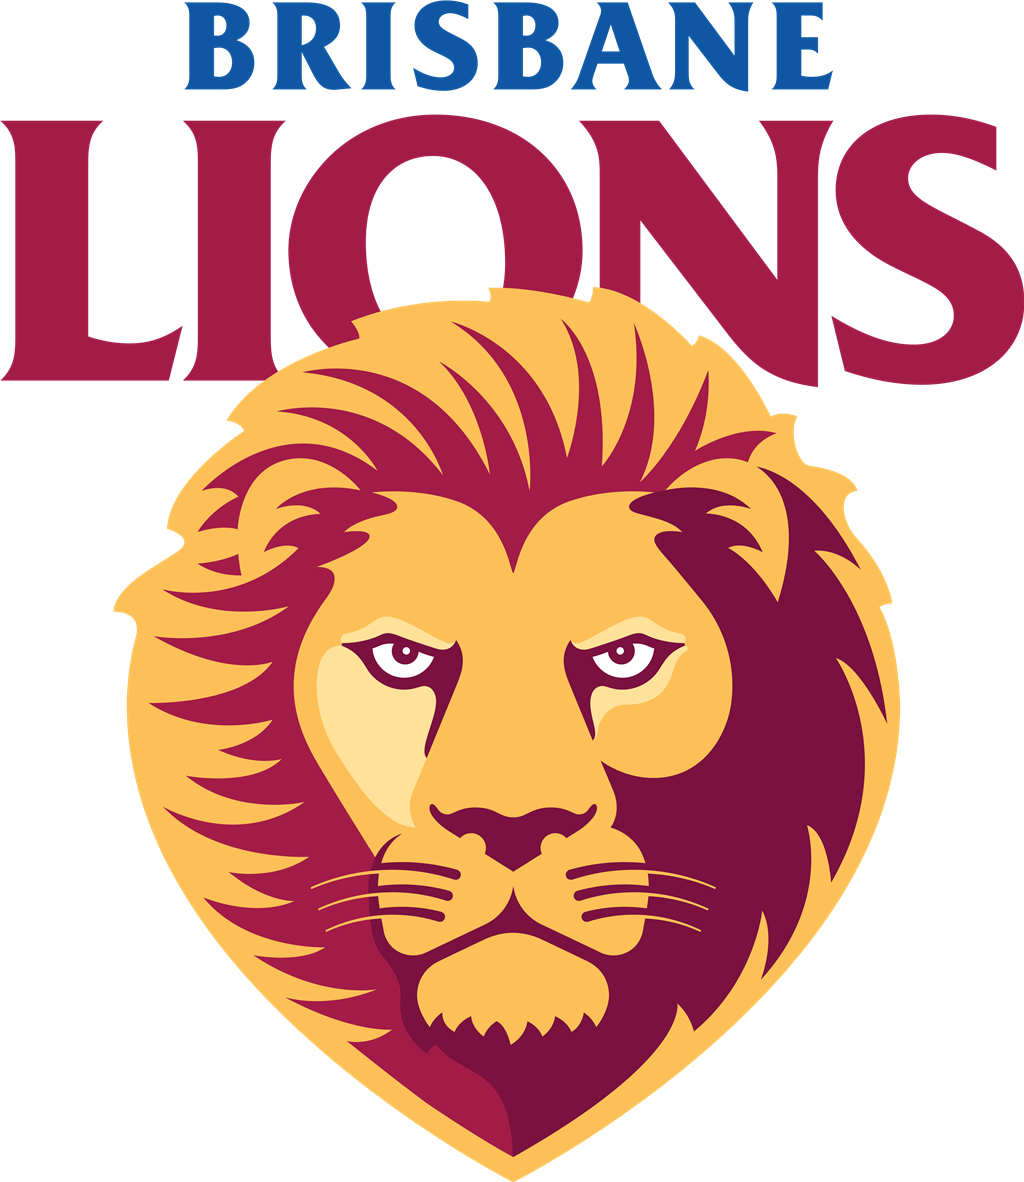 Brisbane Lions logotype, transparent .png, medium, large